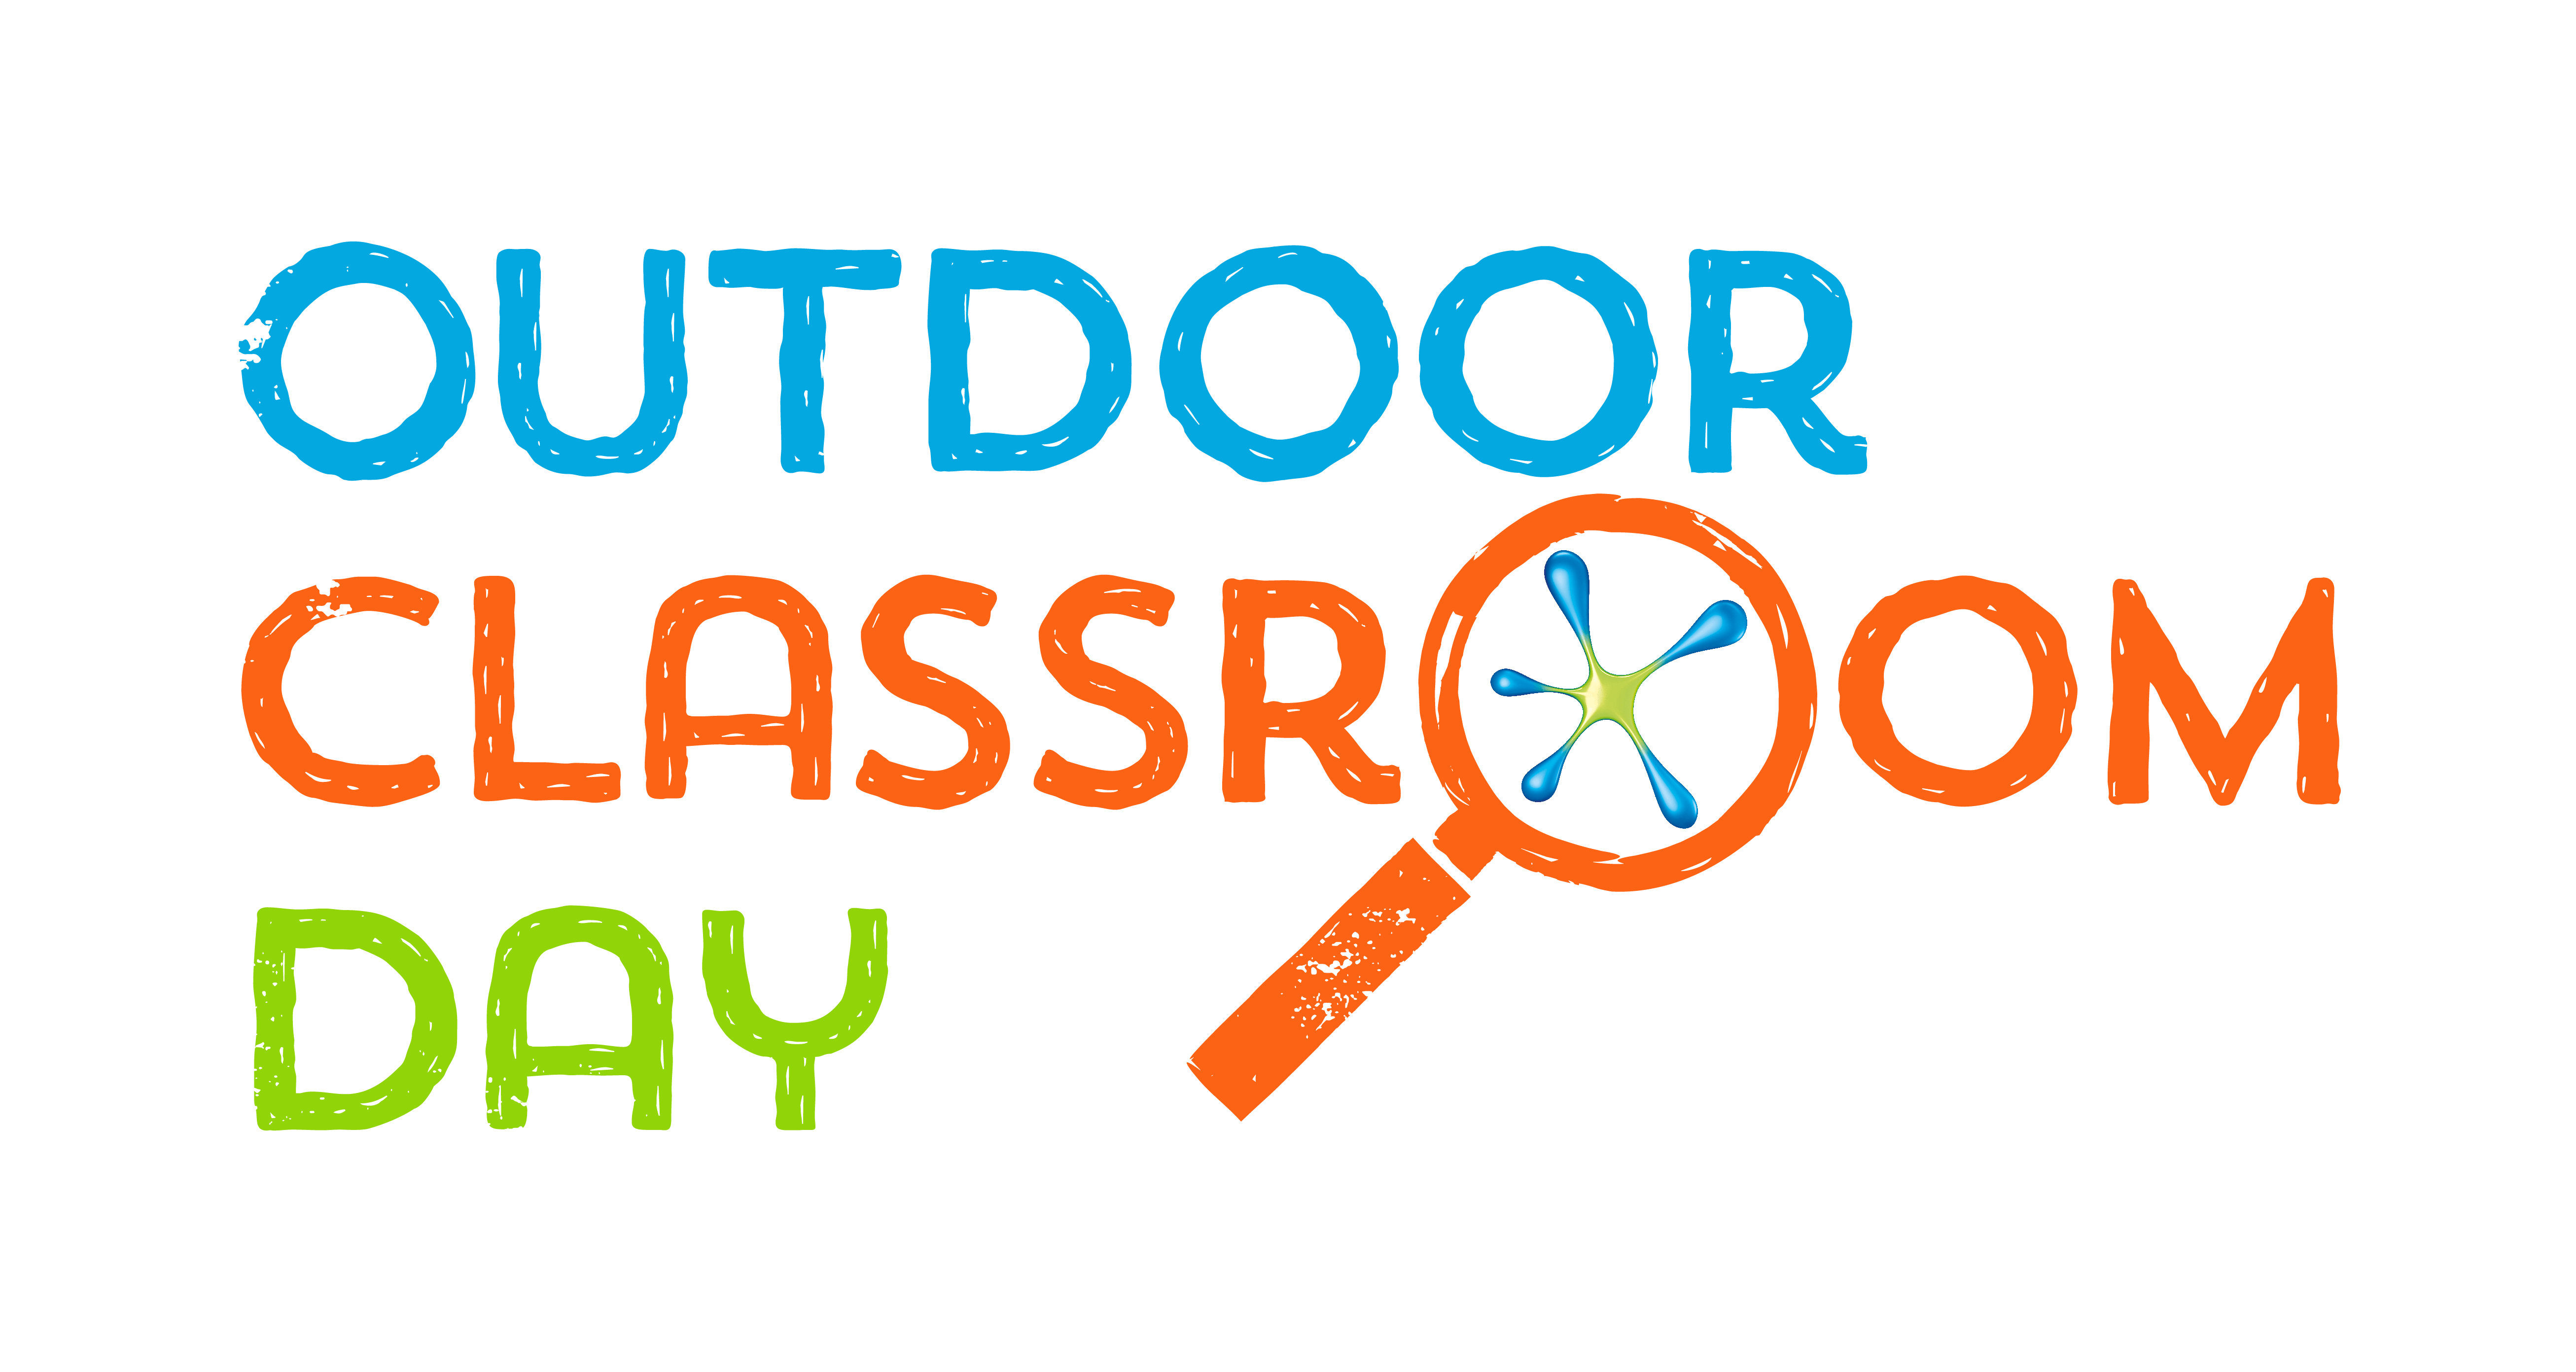 Google Classroom Logo - Outdoor Classroom Day colour logo — create your own materials for ...